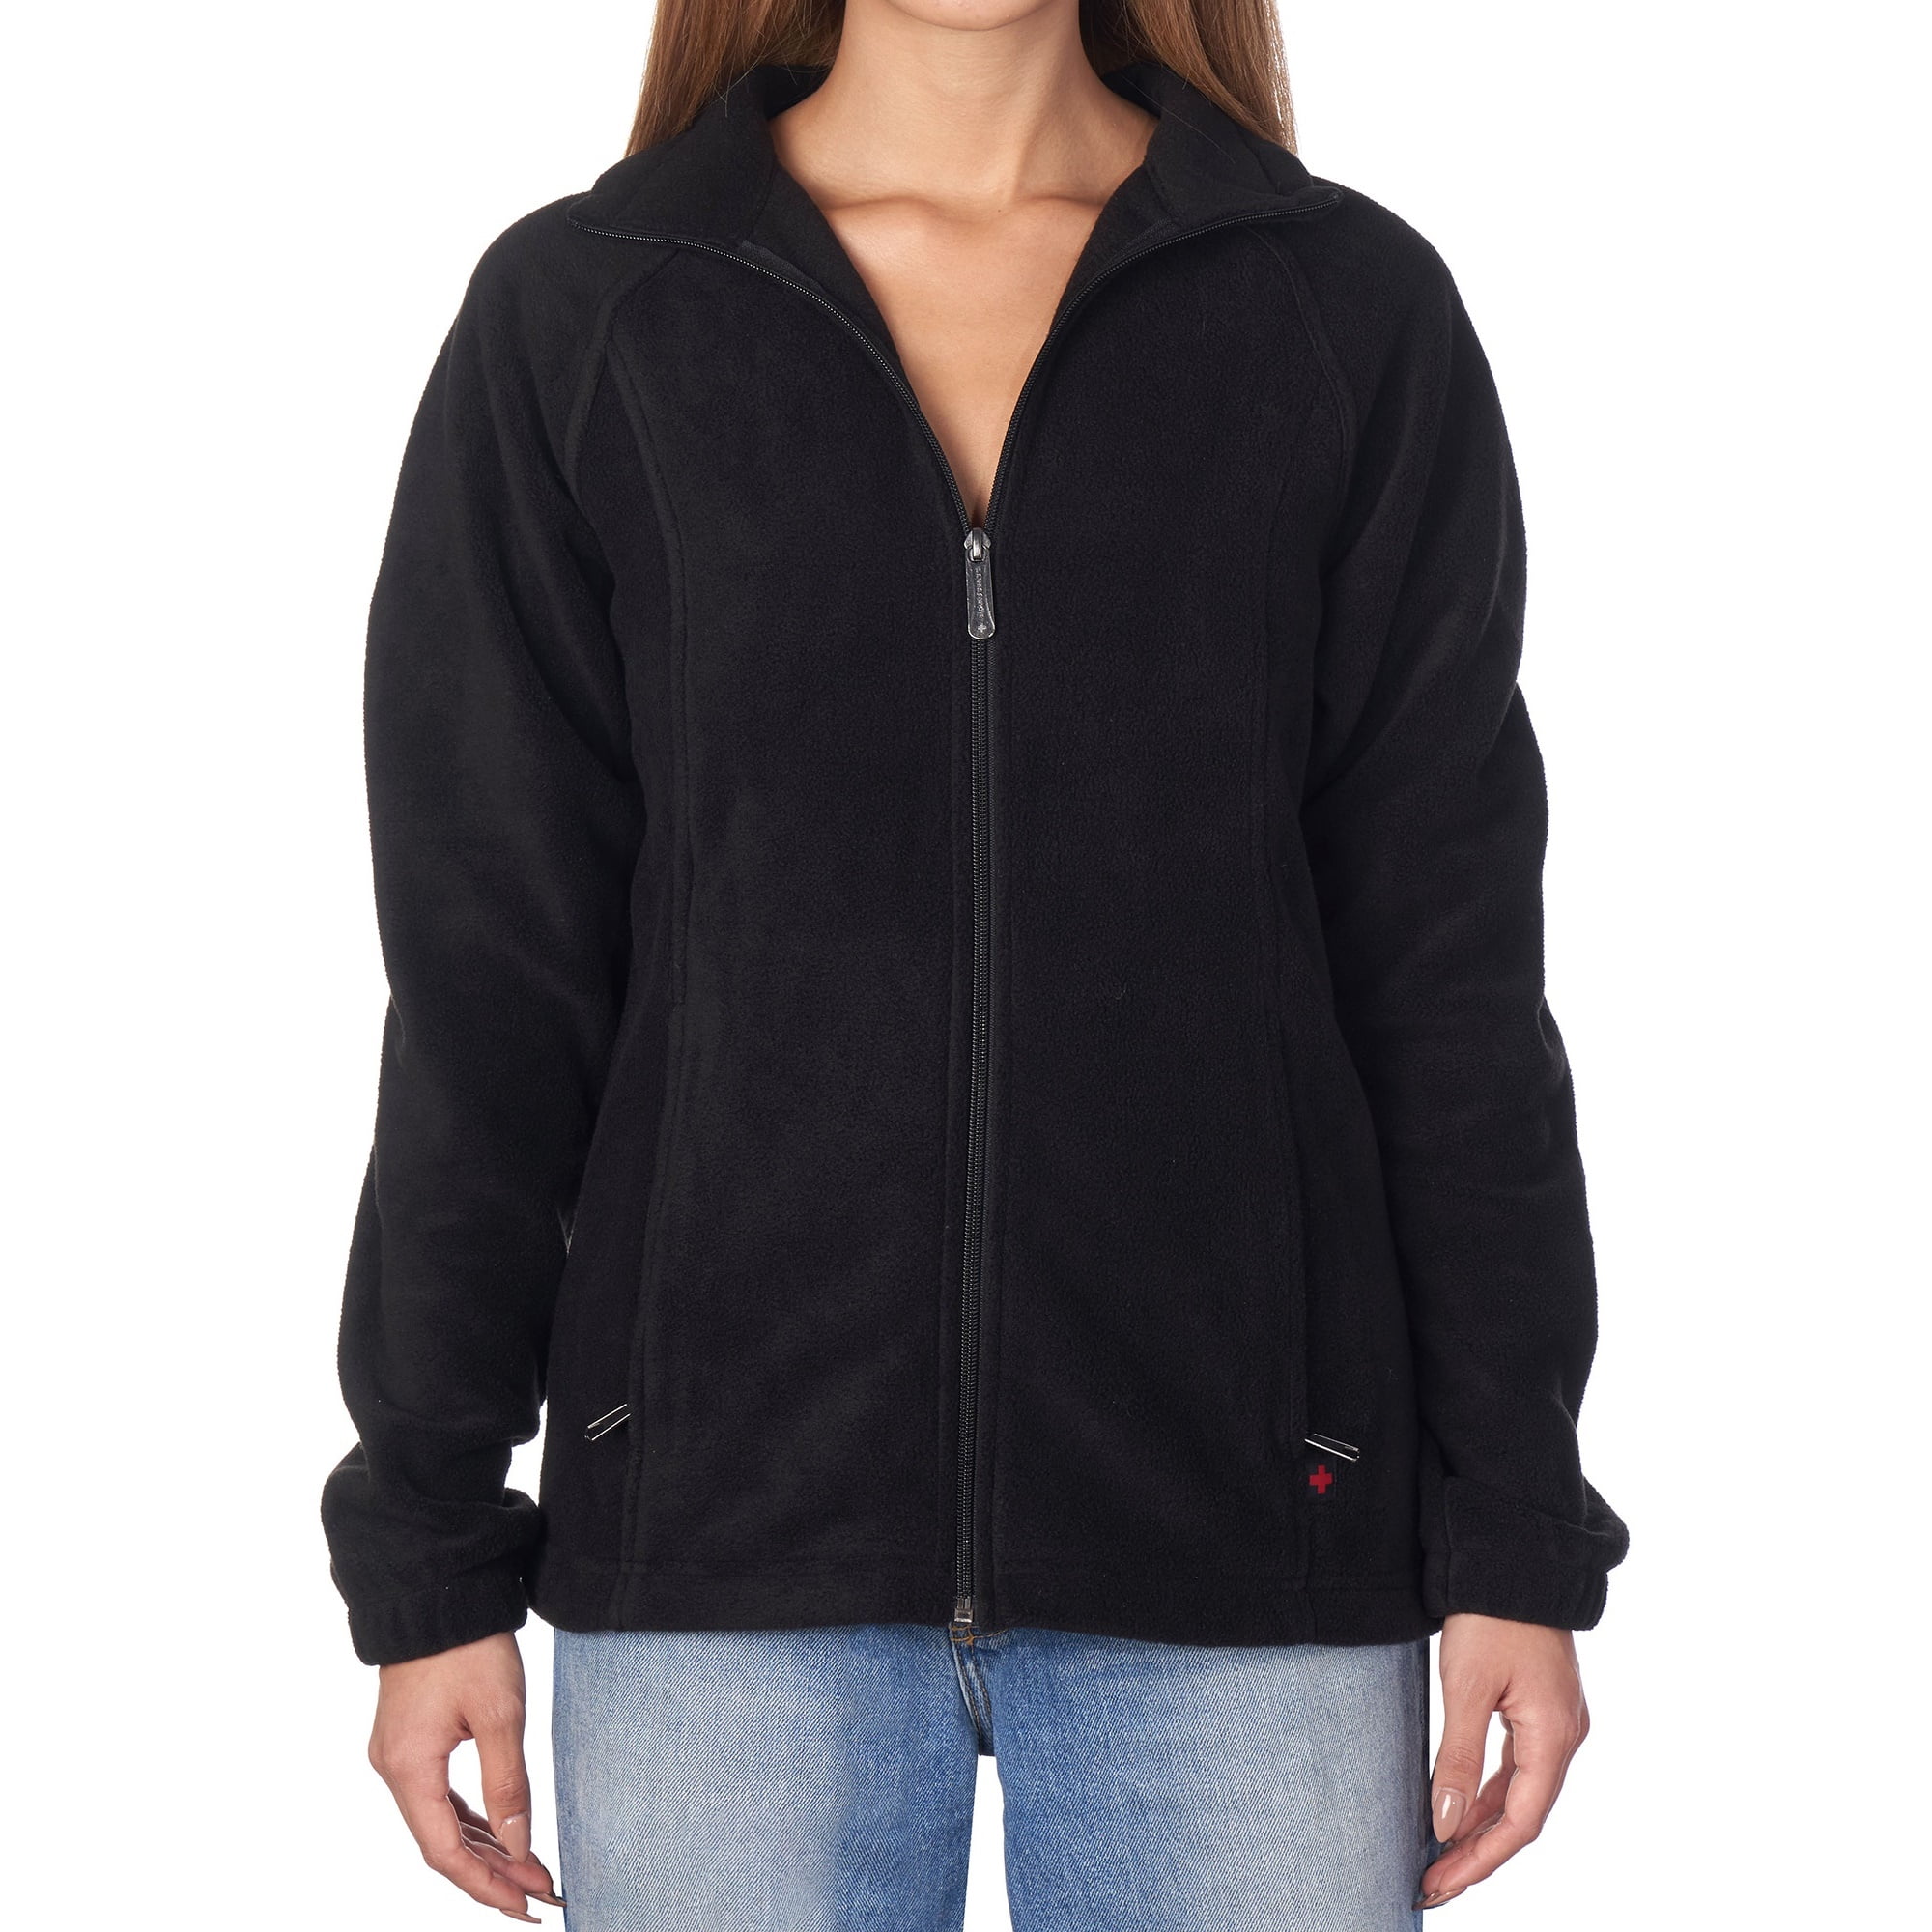 Grabsa Women Fit Ultra Soft Warm Lightweight Coat Full Zip Fleece Jacket